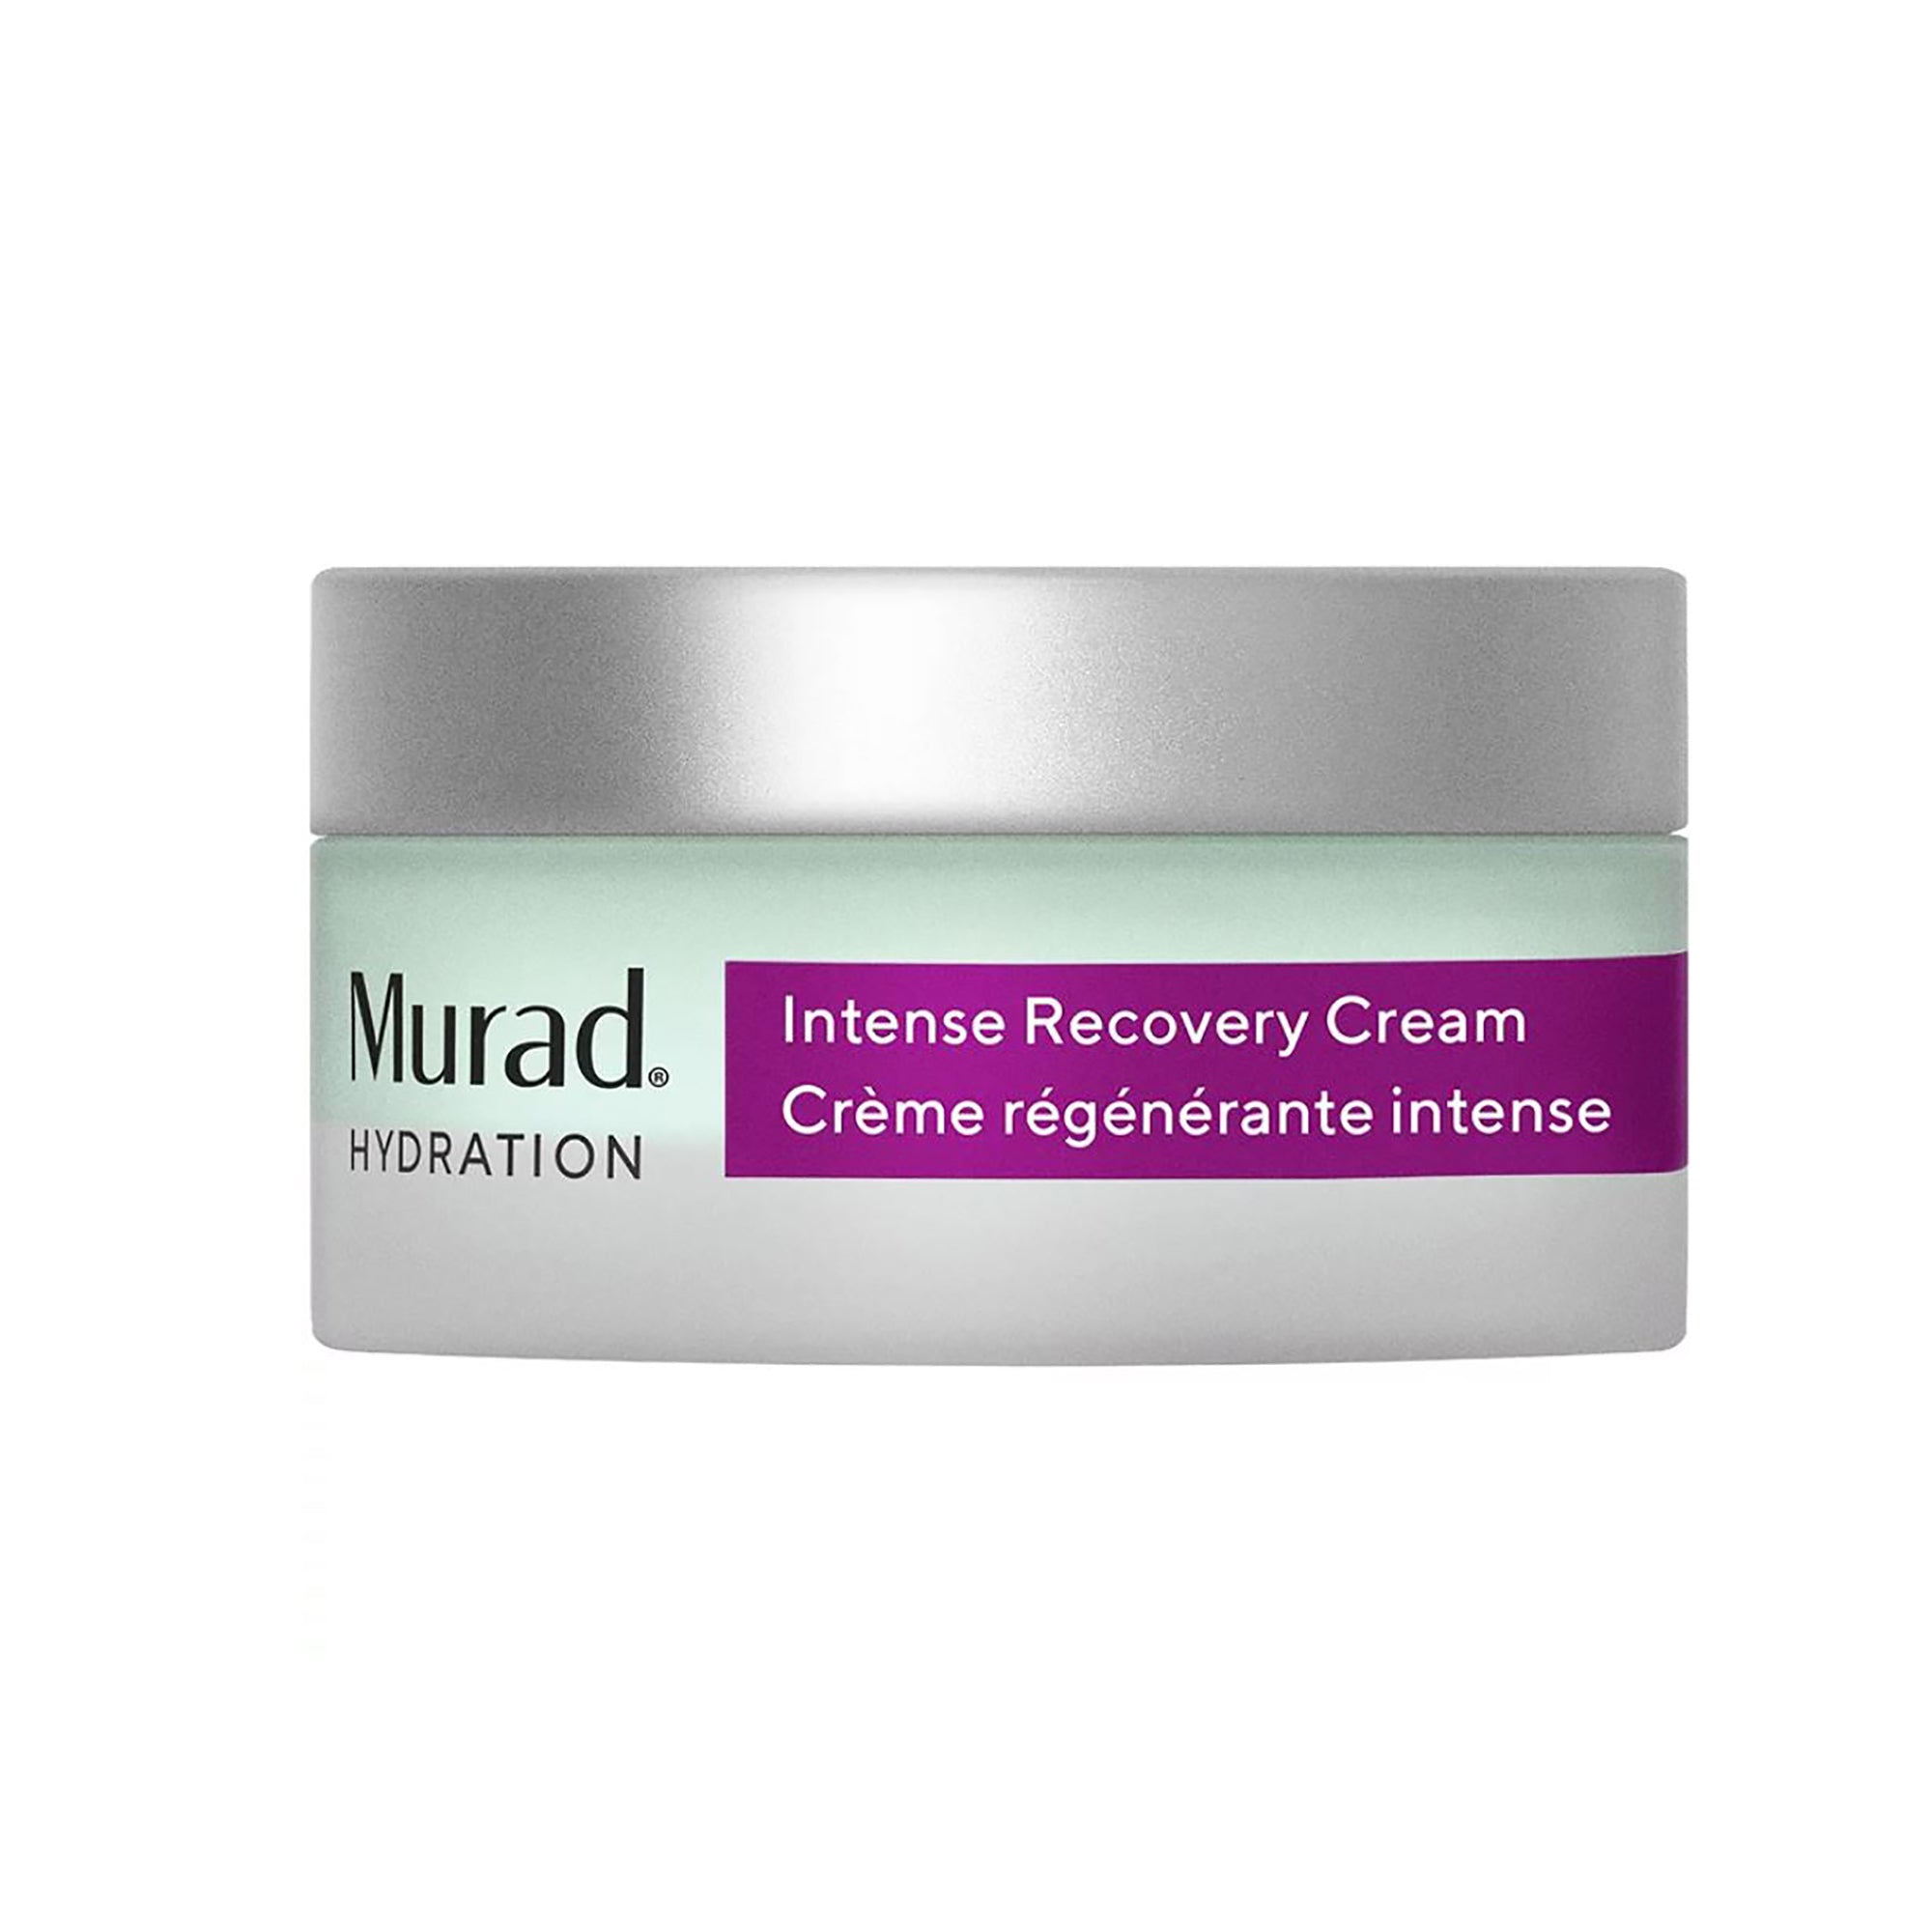 Murad Intensive Recovery Cream / 1.7 oz